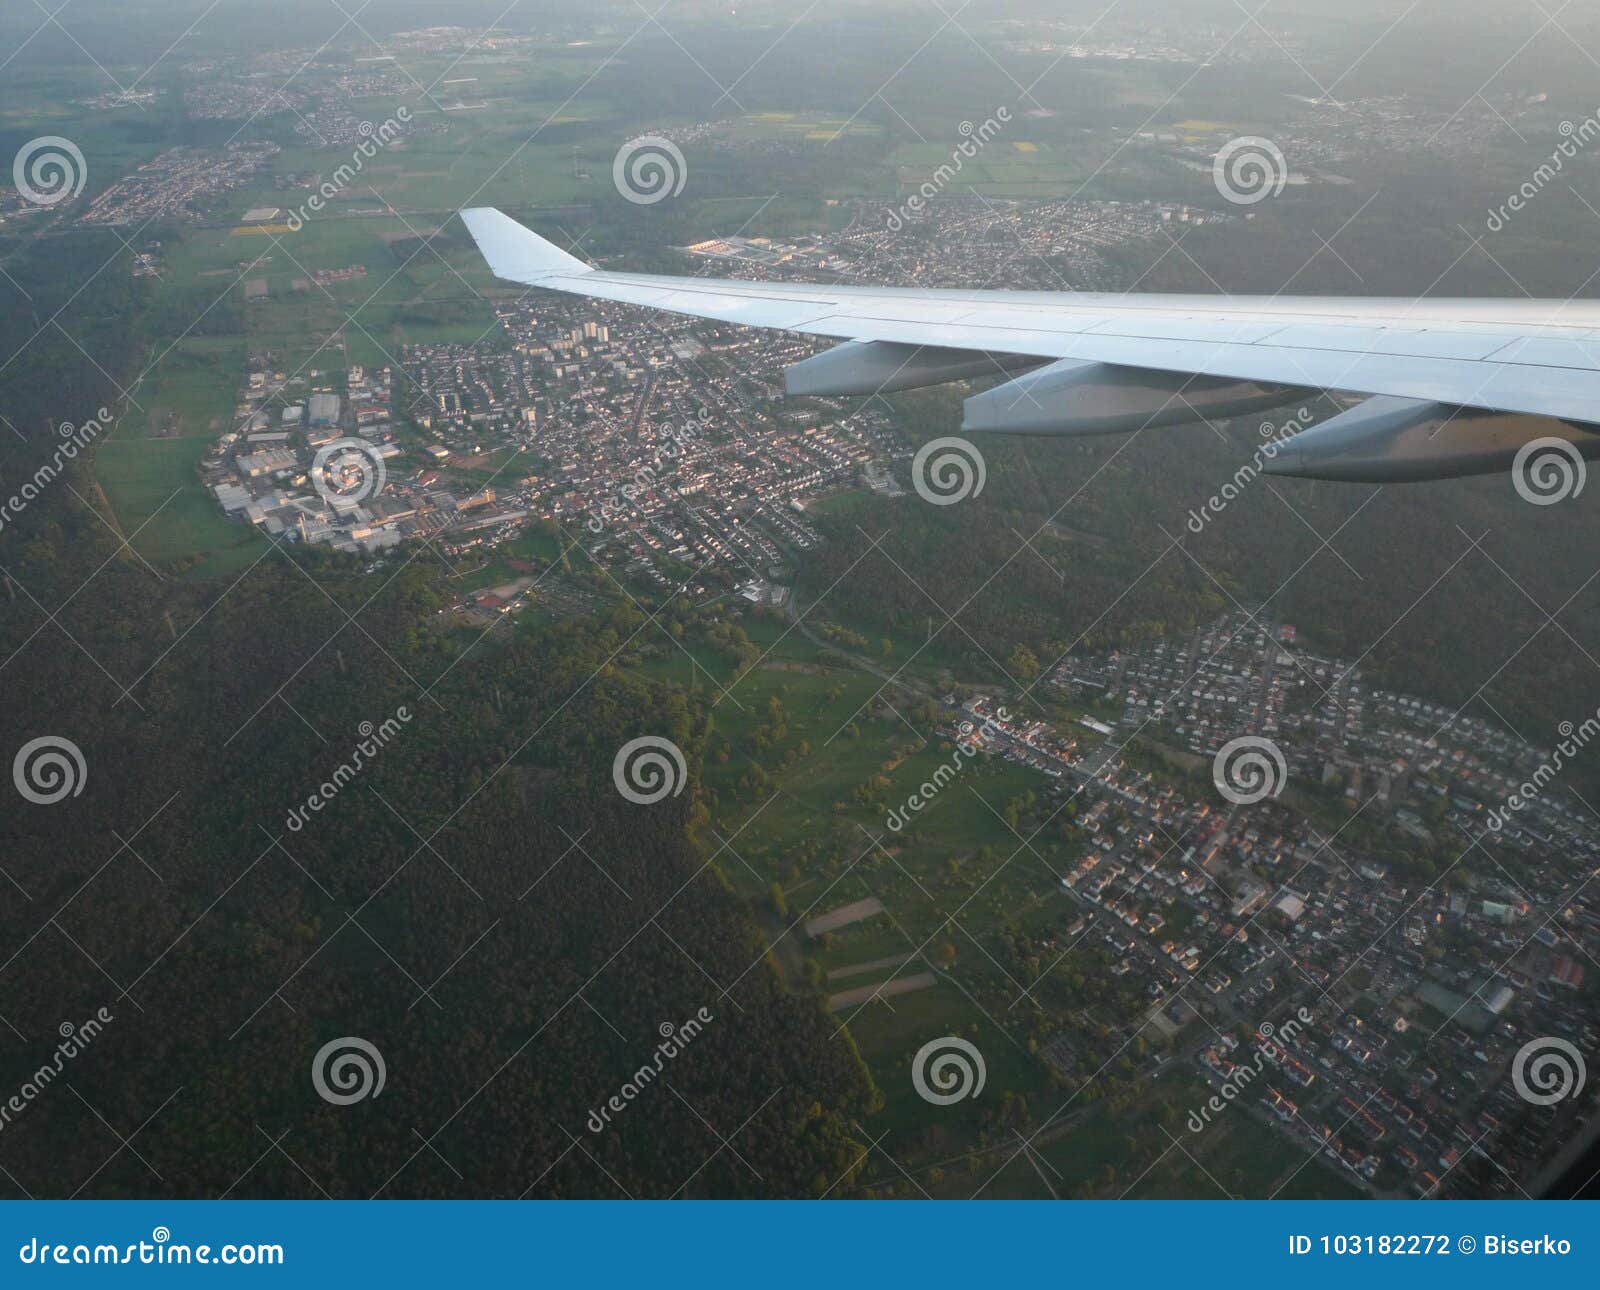 airplane flying over bayern, germany